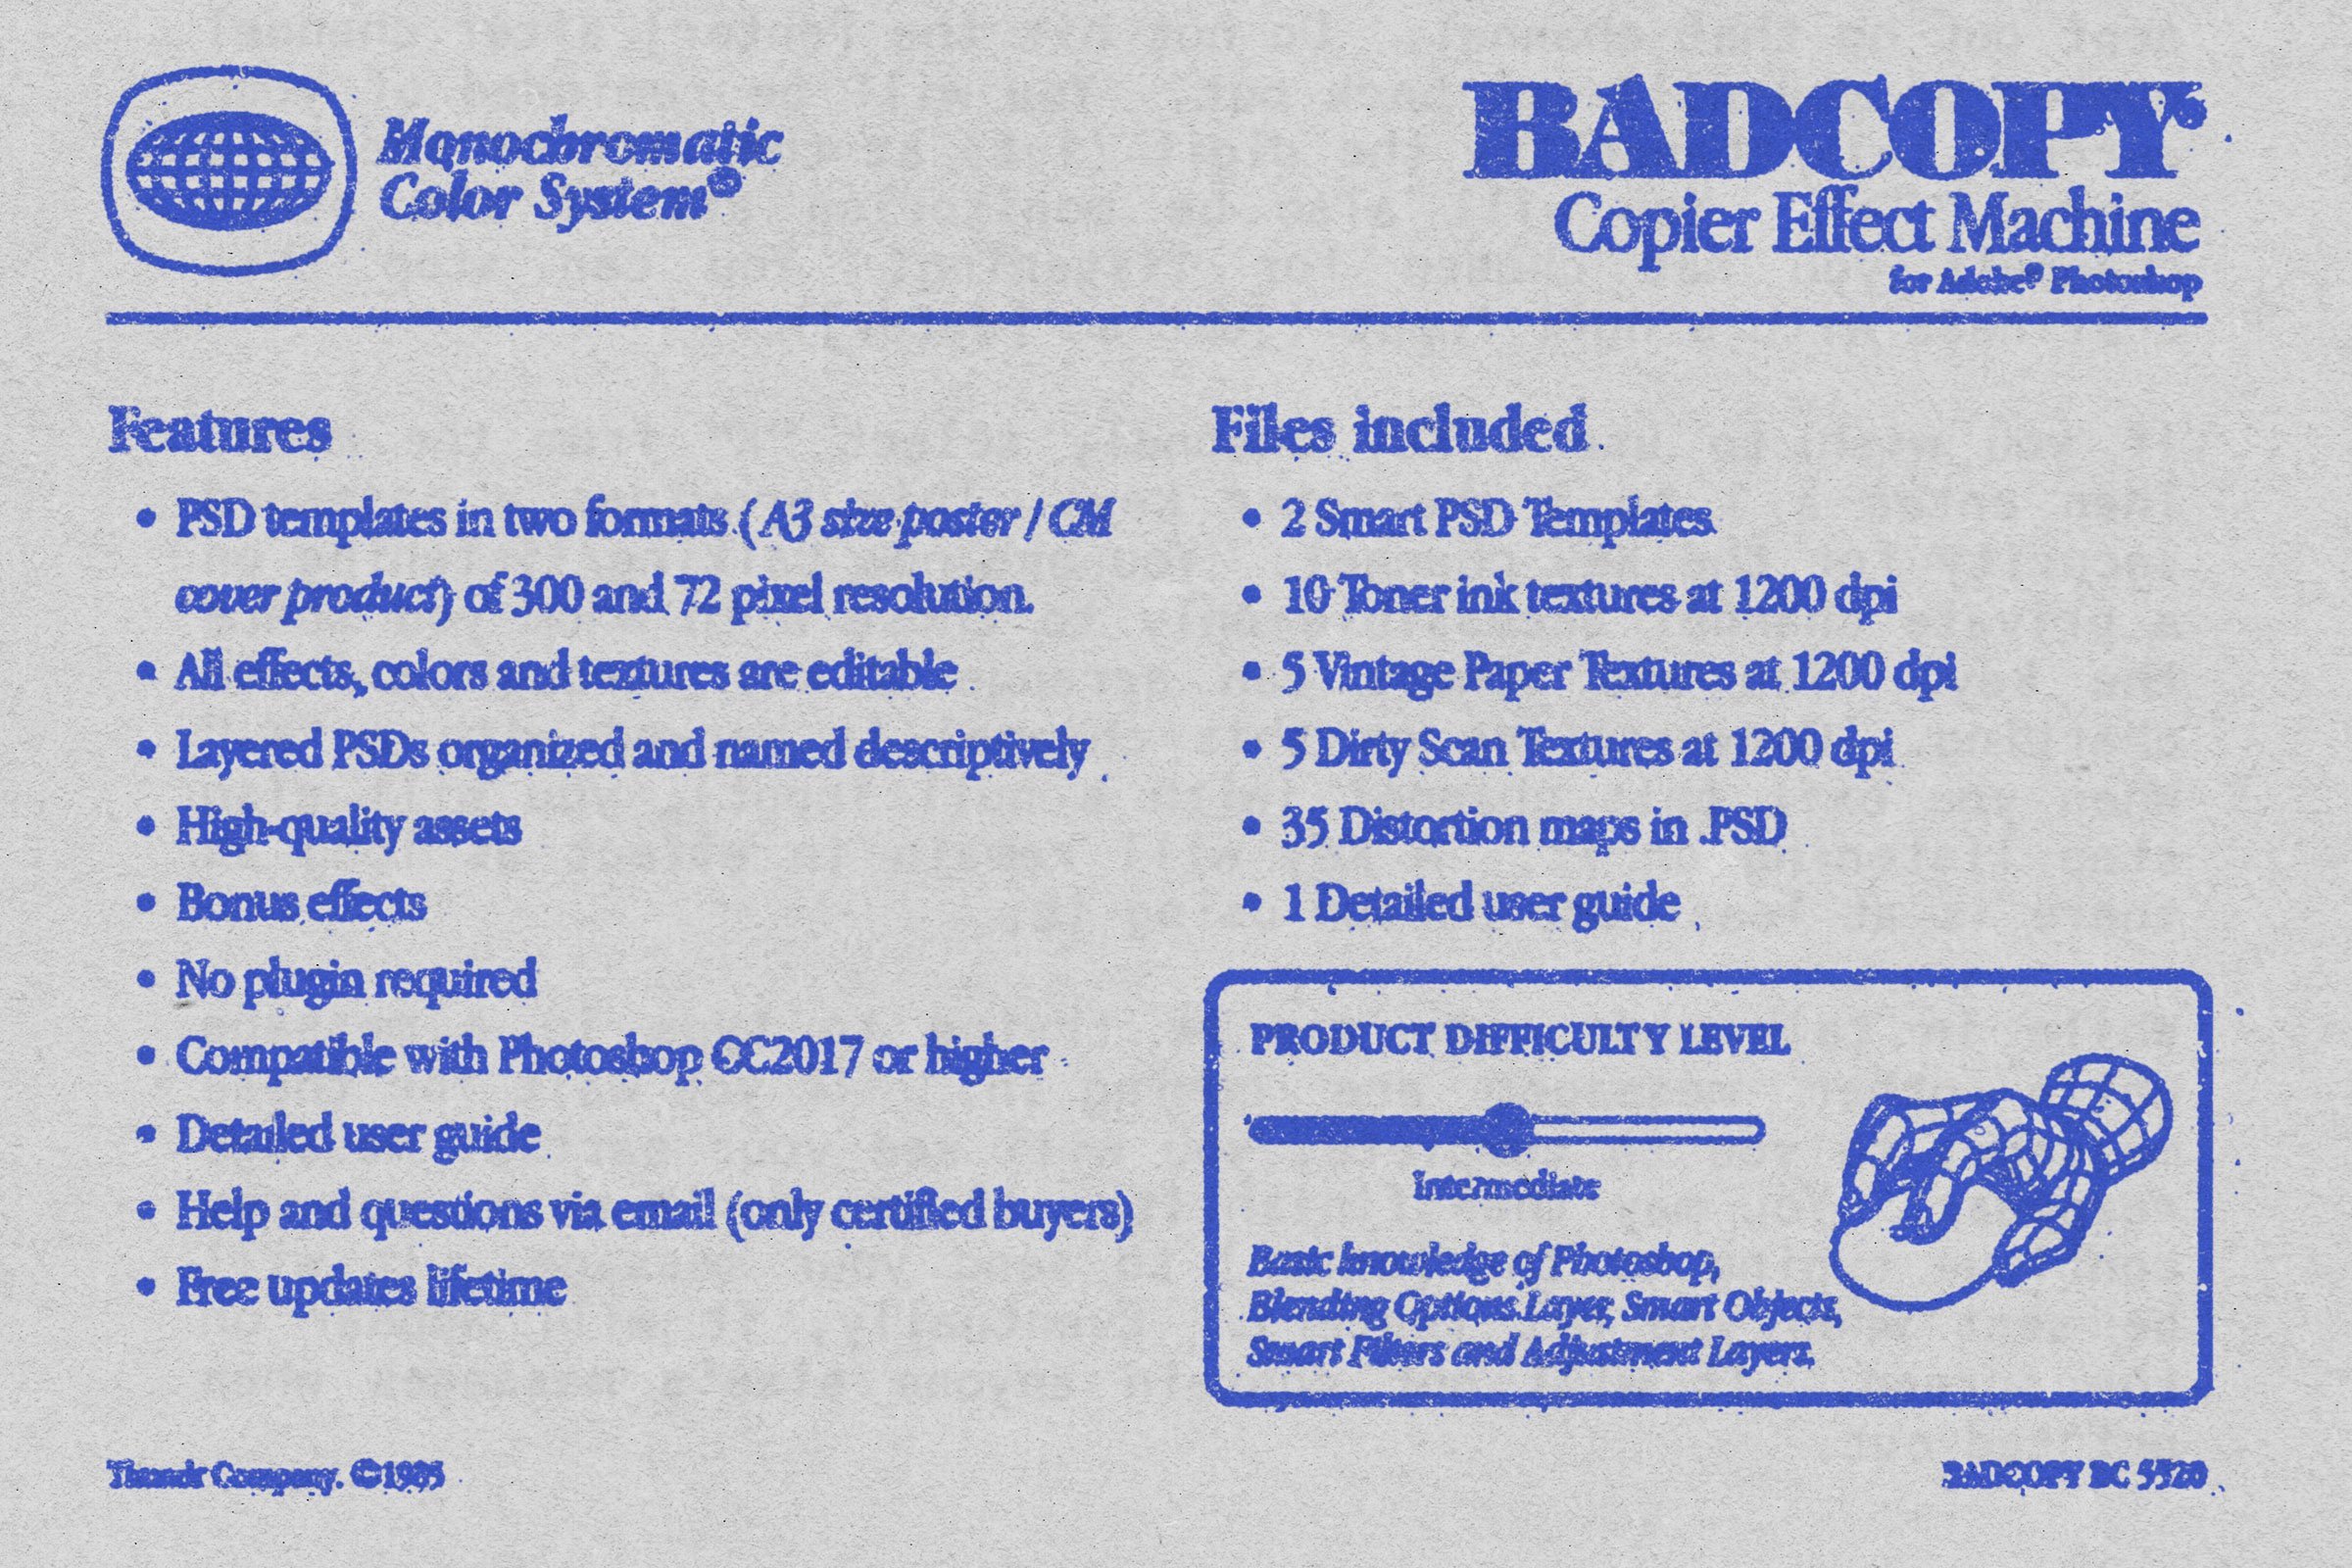 badcopy® features 266